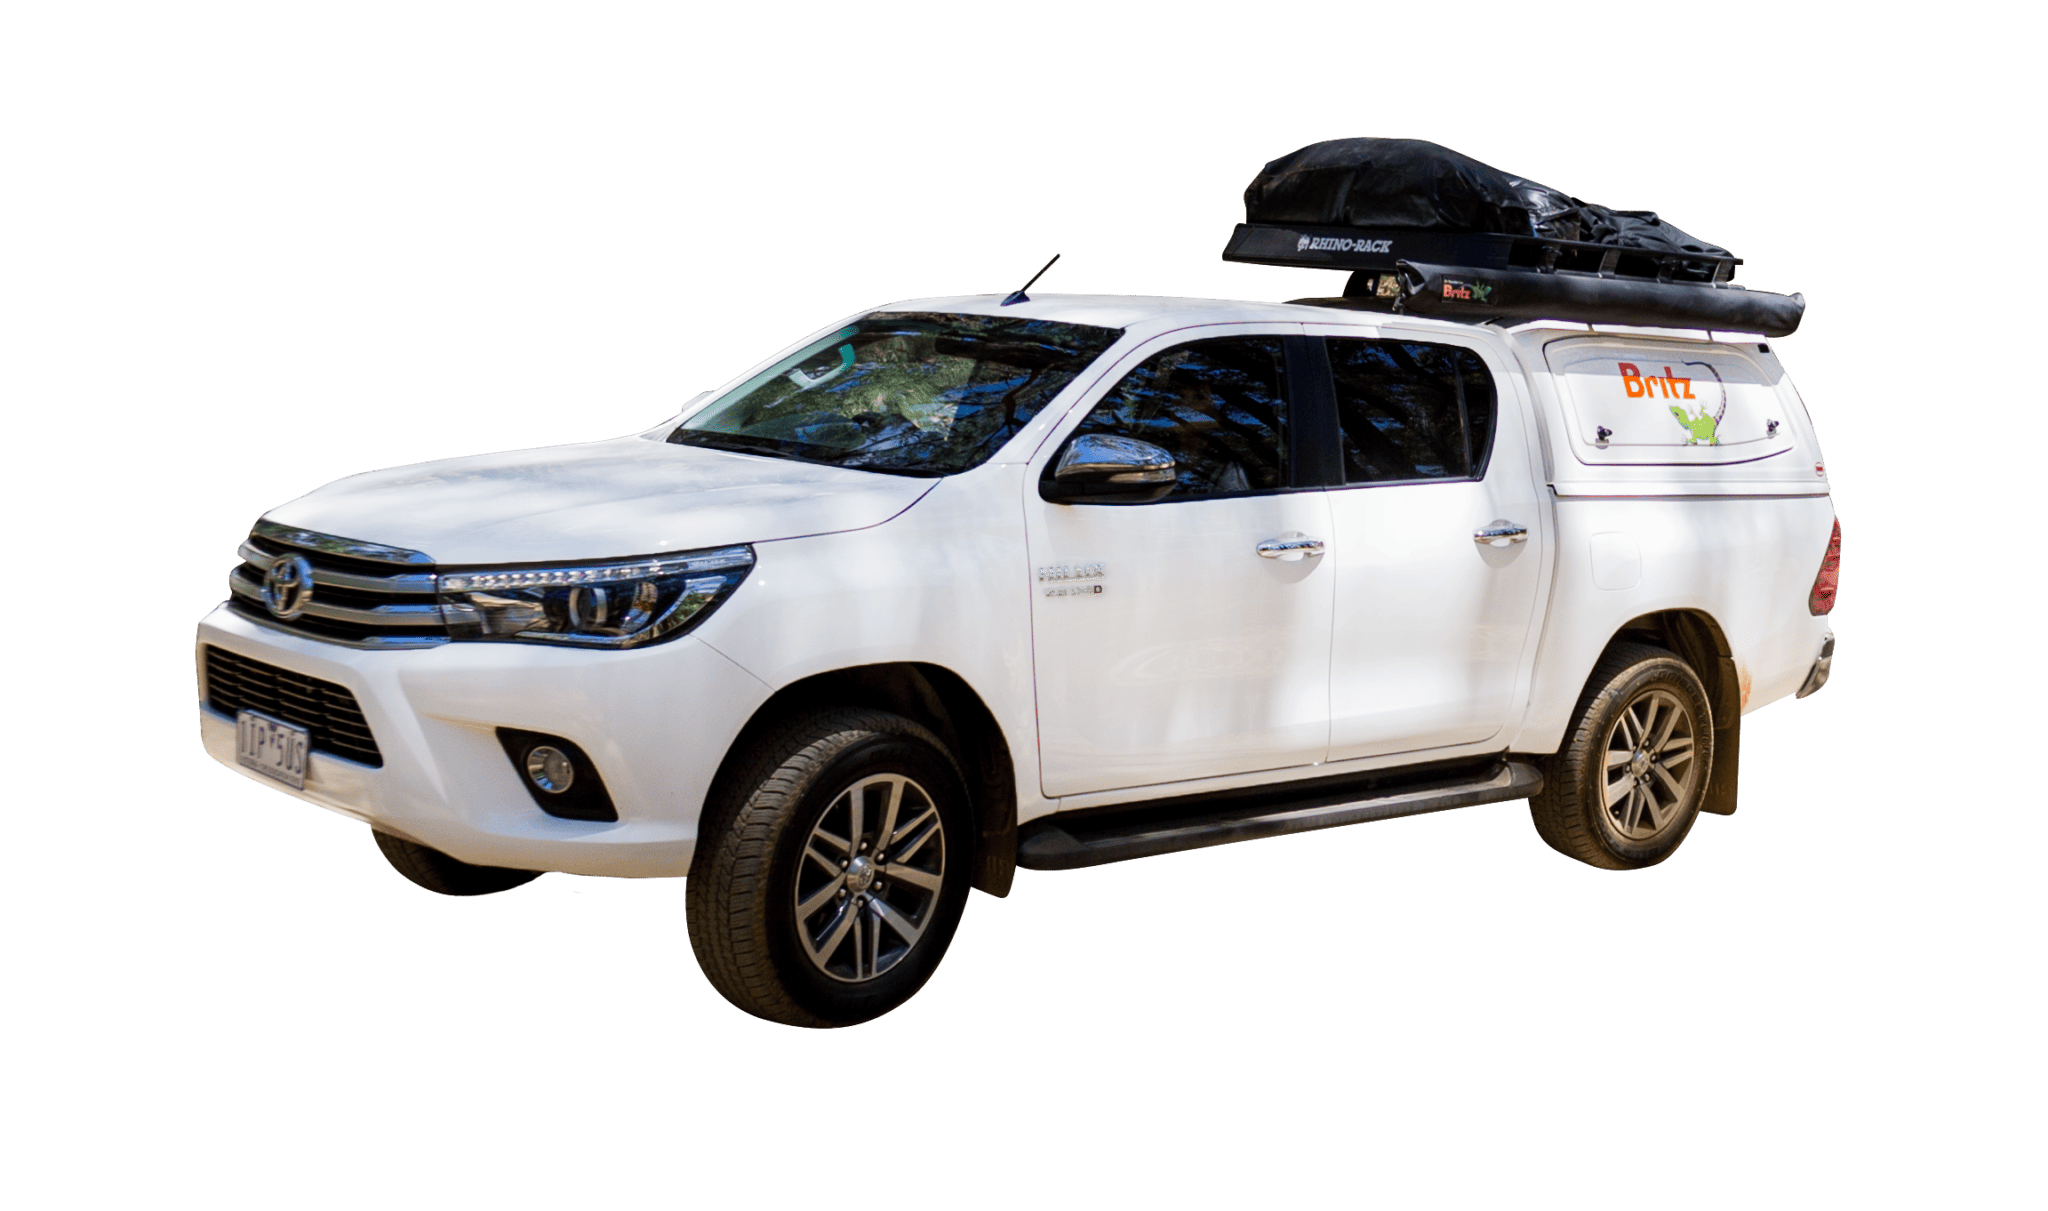 Outback 4WD - Britz Australia